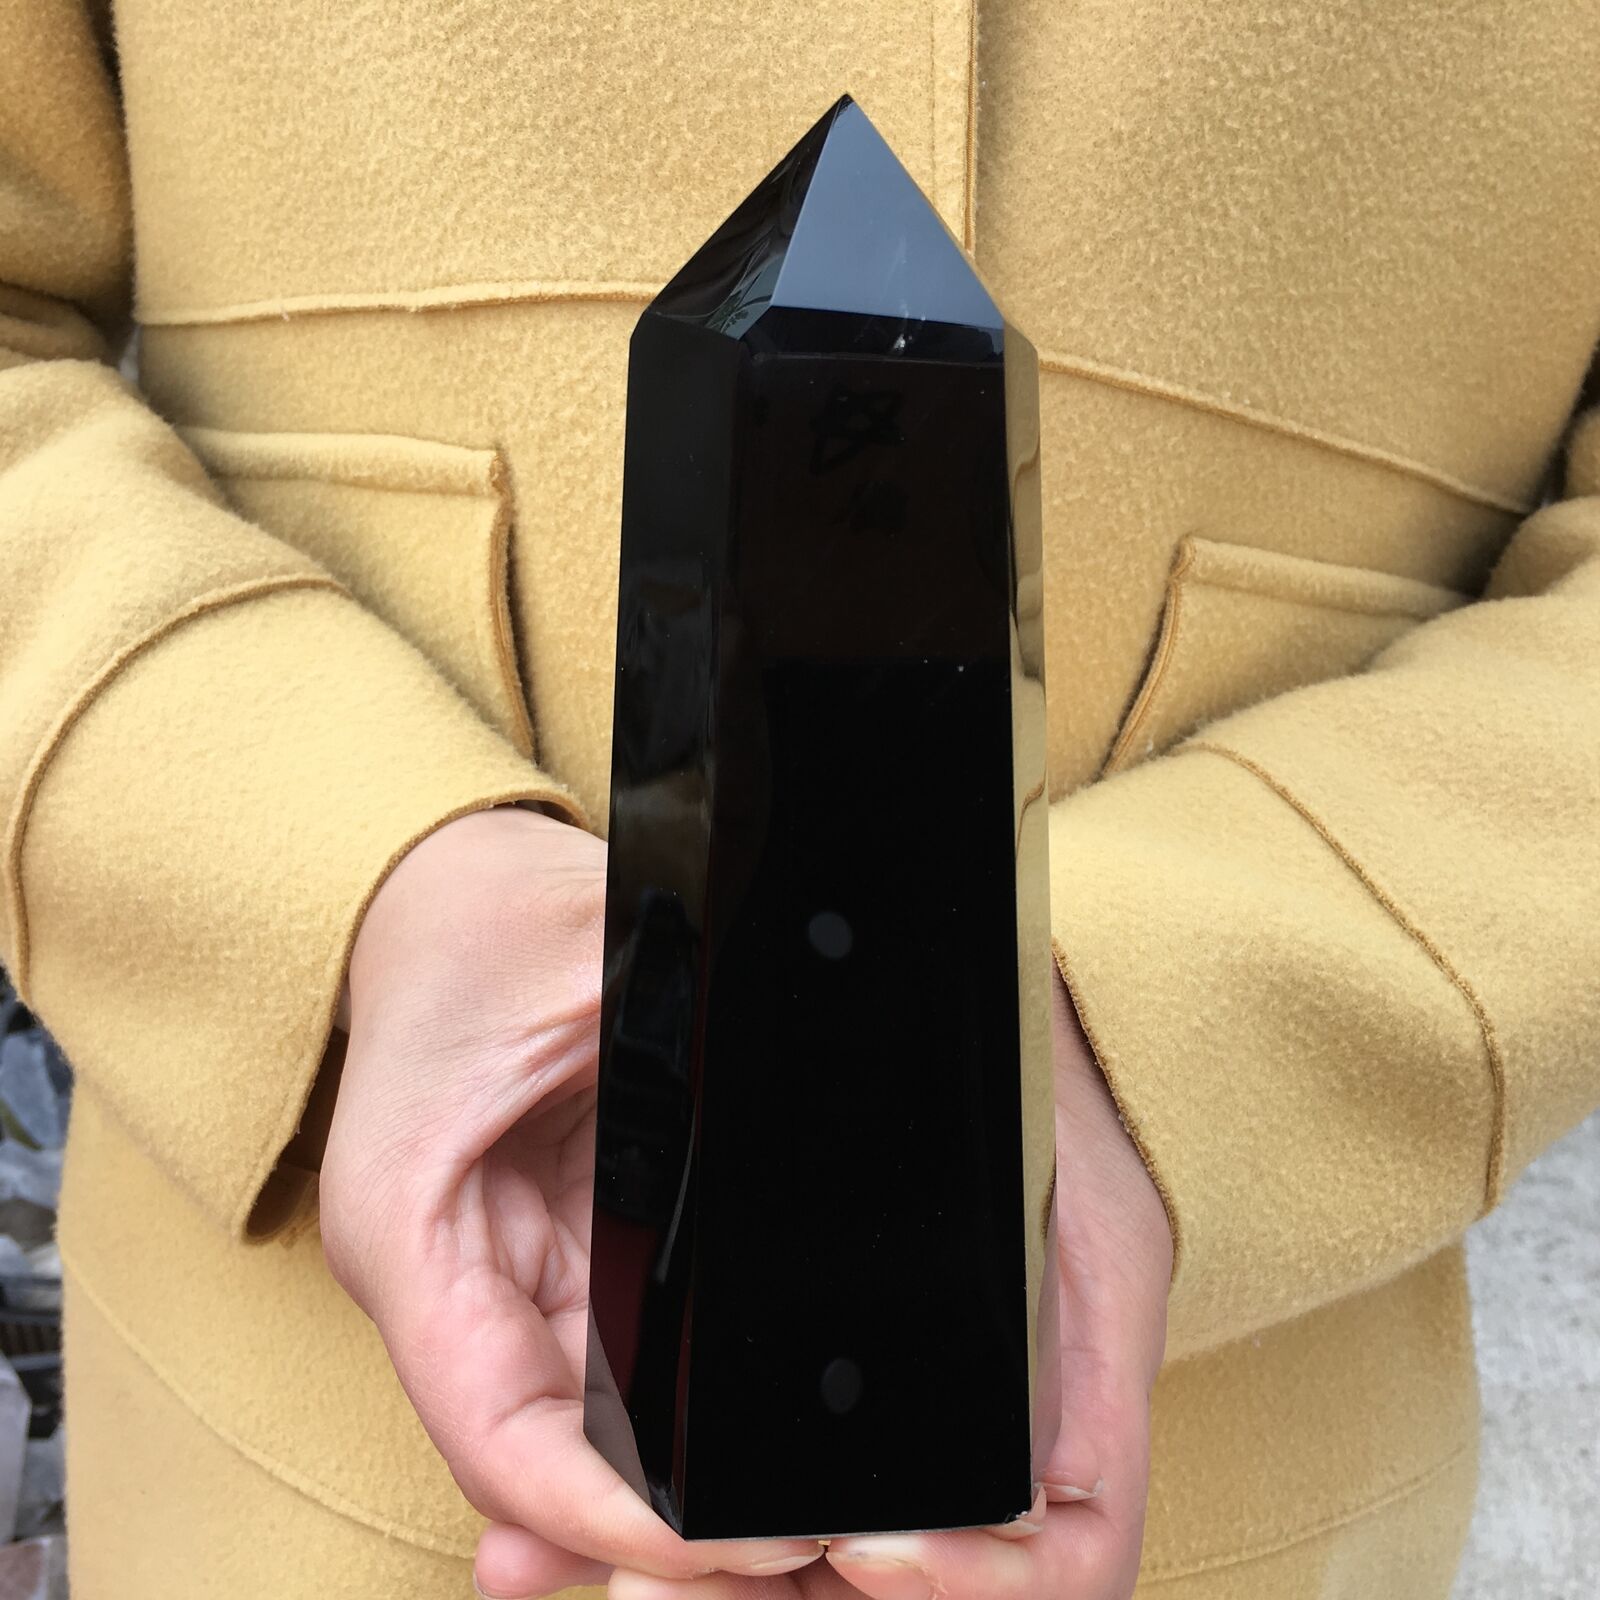 1PC Natural obsidian obelisk point quartz crystal wand healing 400-600g